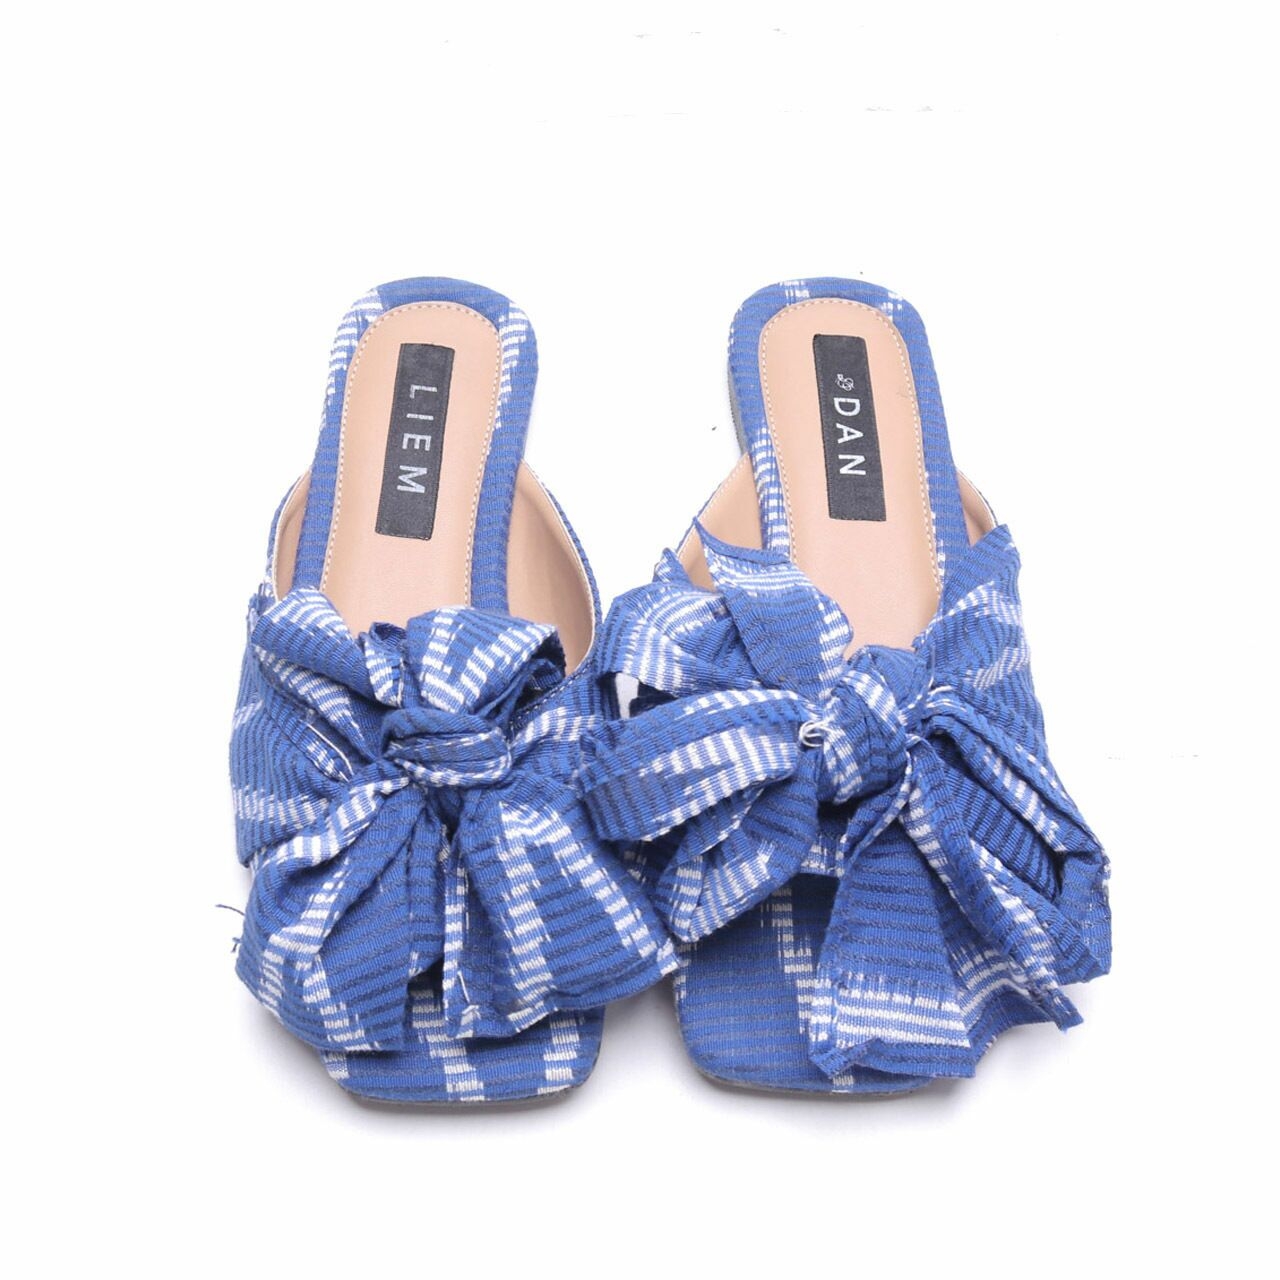 Dan Liem Blue & White Sandals